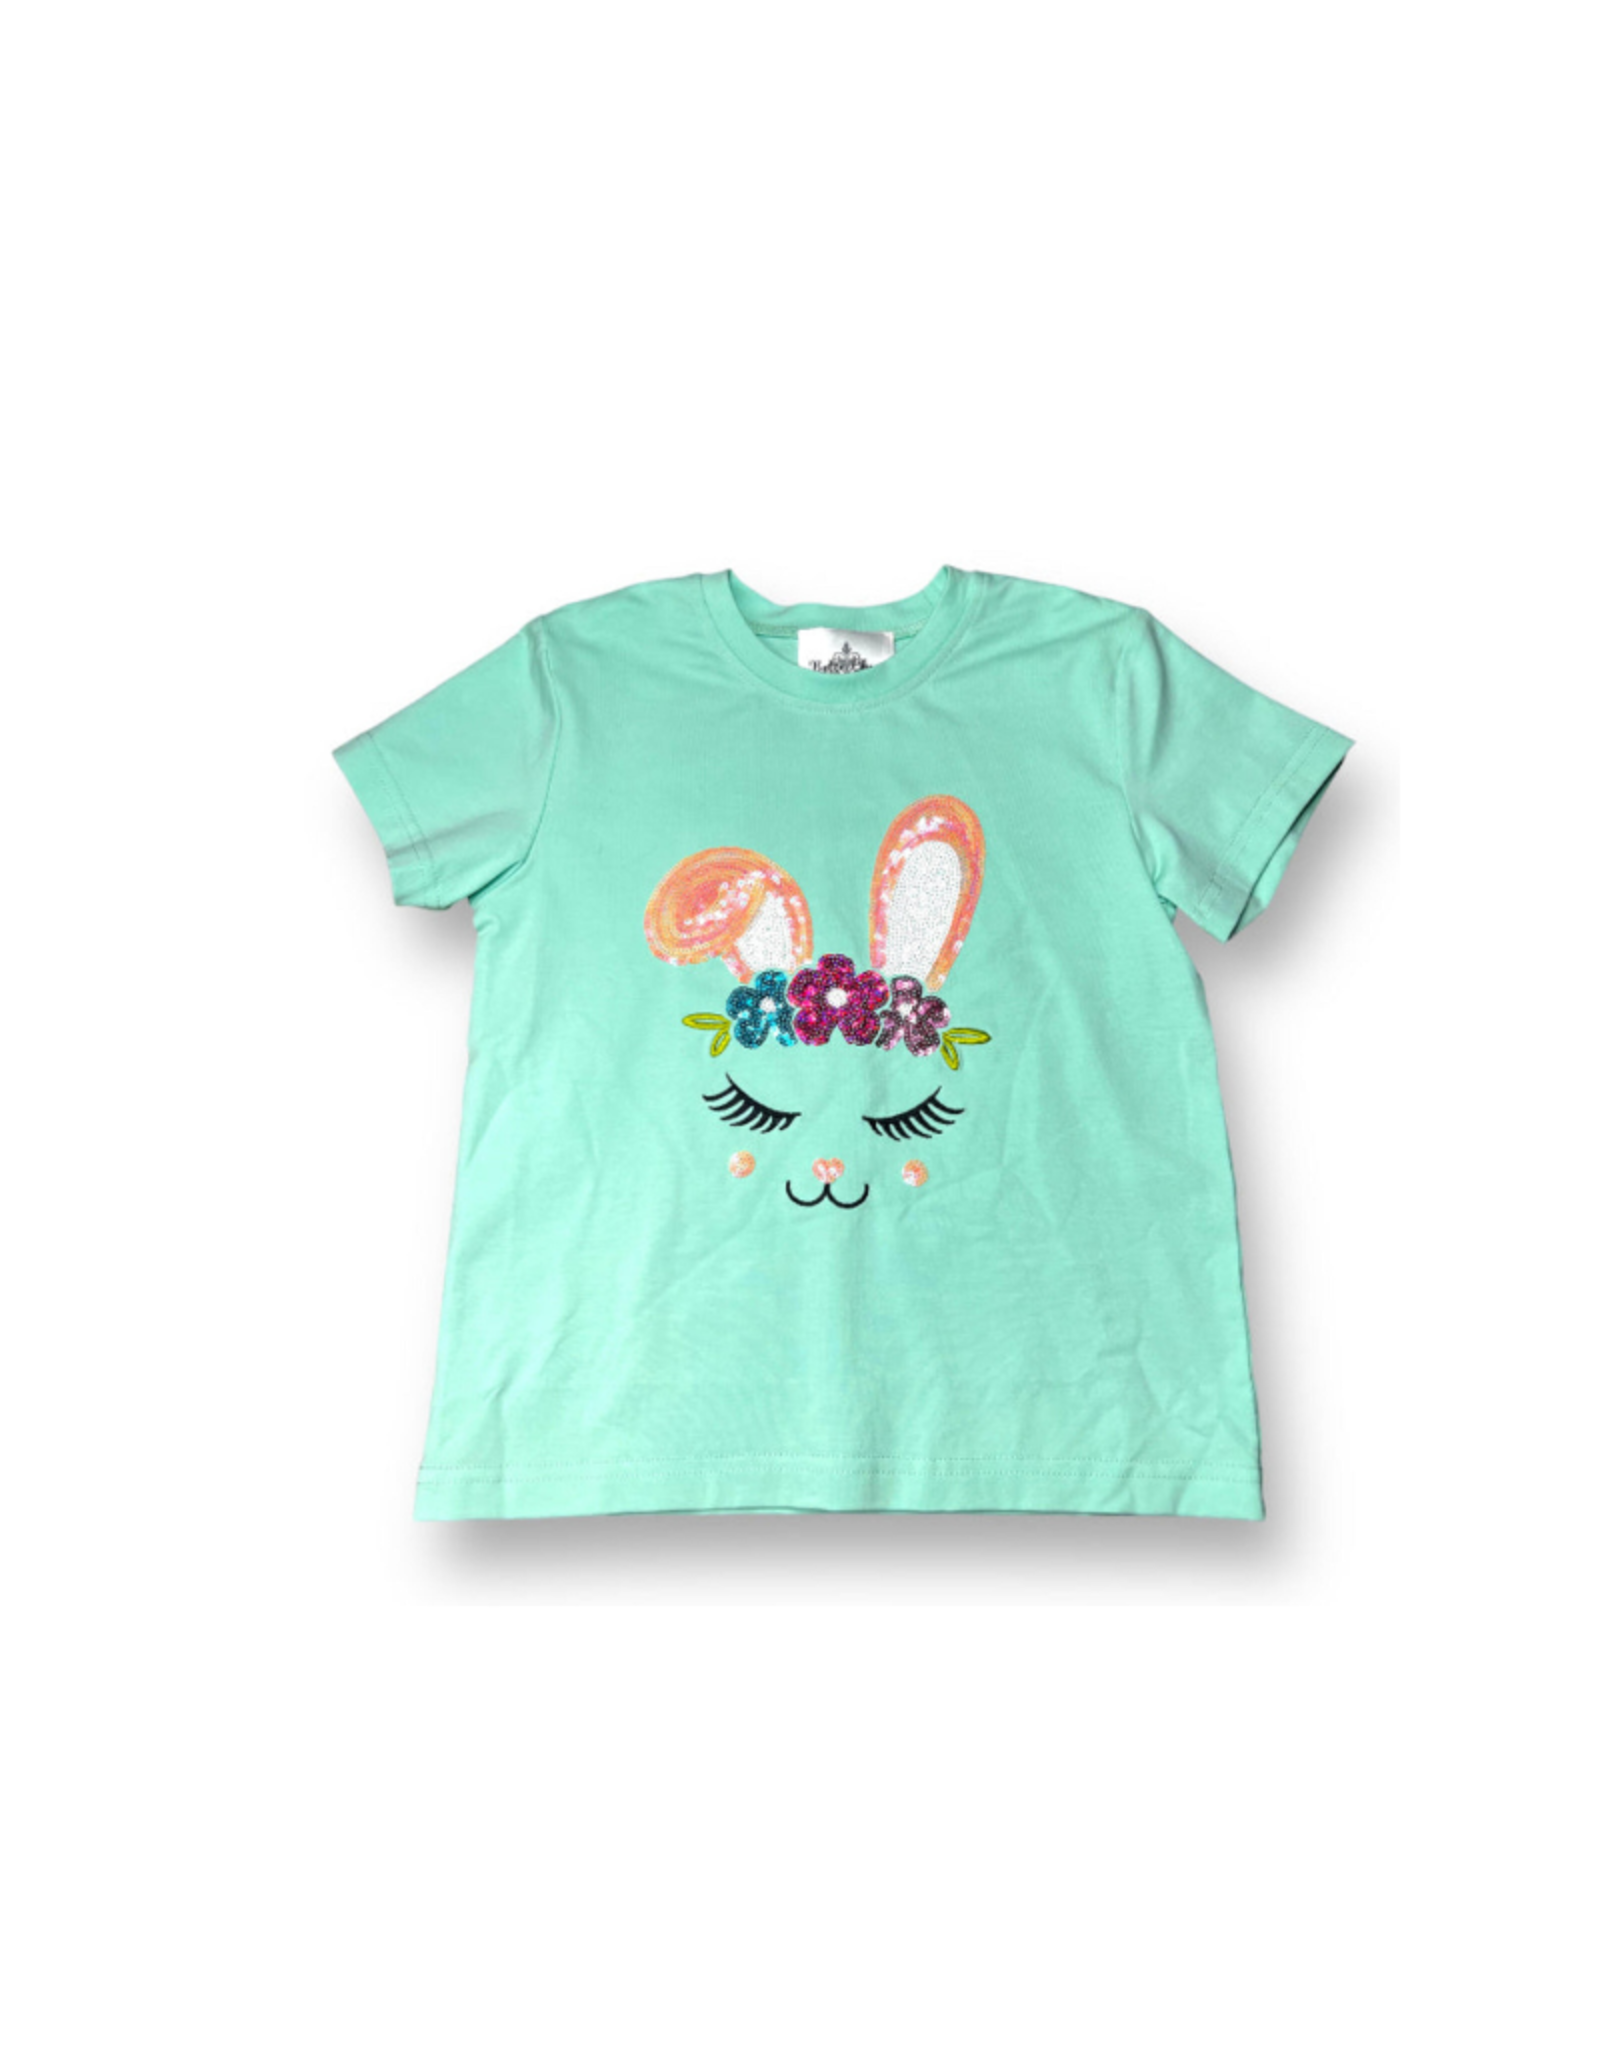 Belle Cher Sequin Flower Bunny Shirt